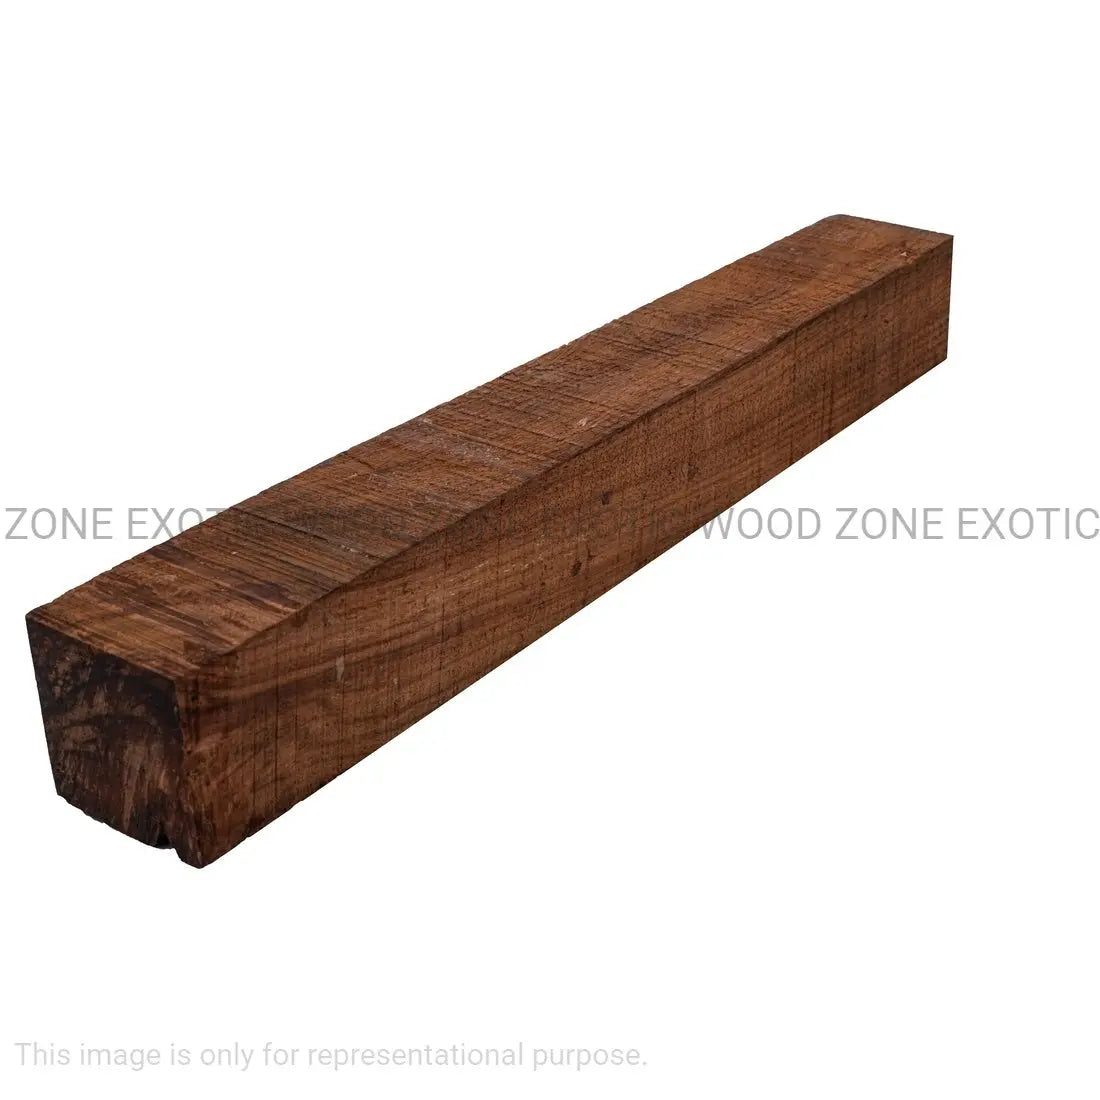 Canarywood Turning Blanks - Exotic Wood Zone - Buy online Across USA 